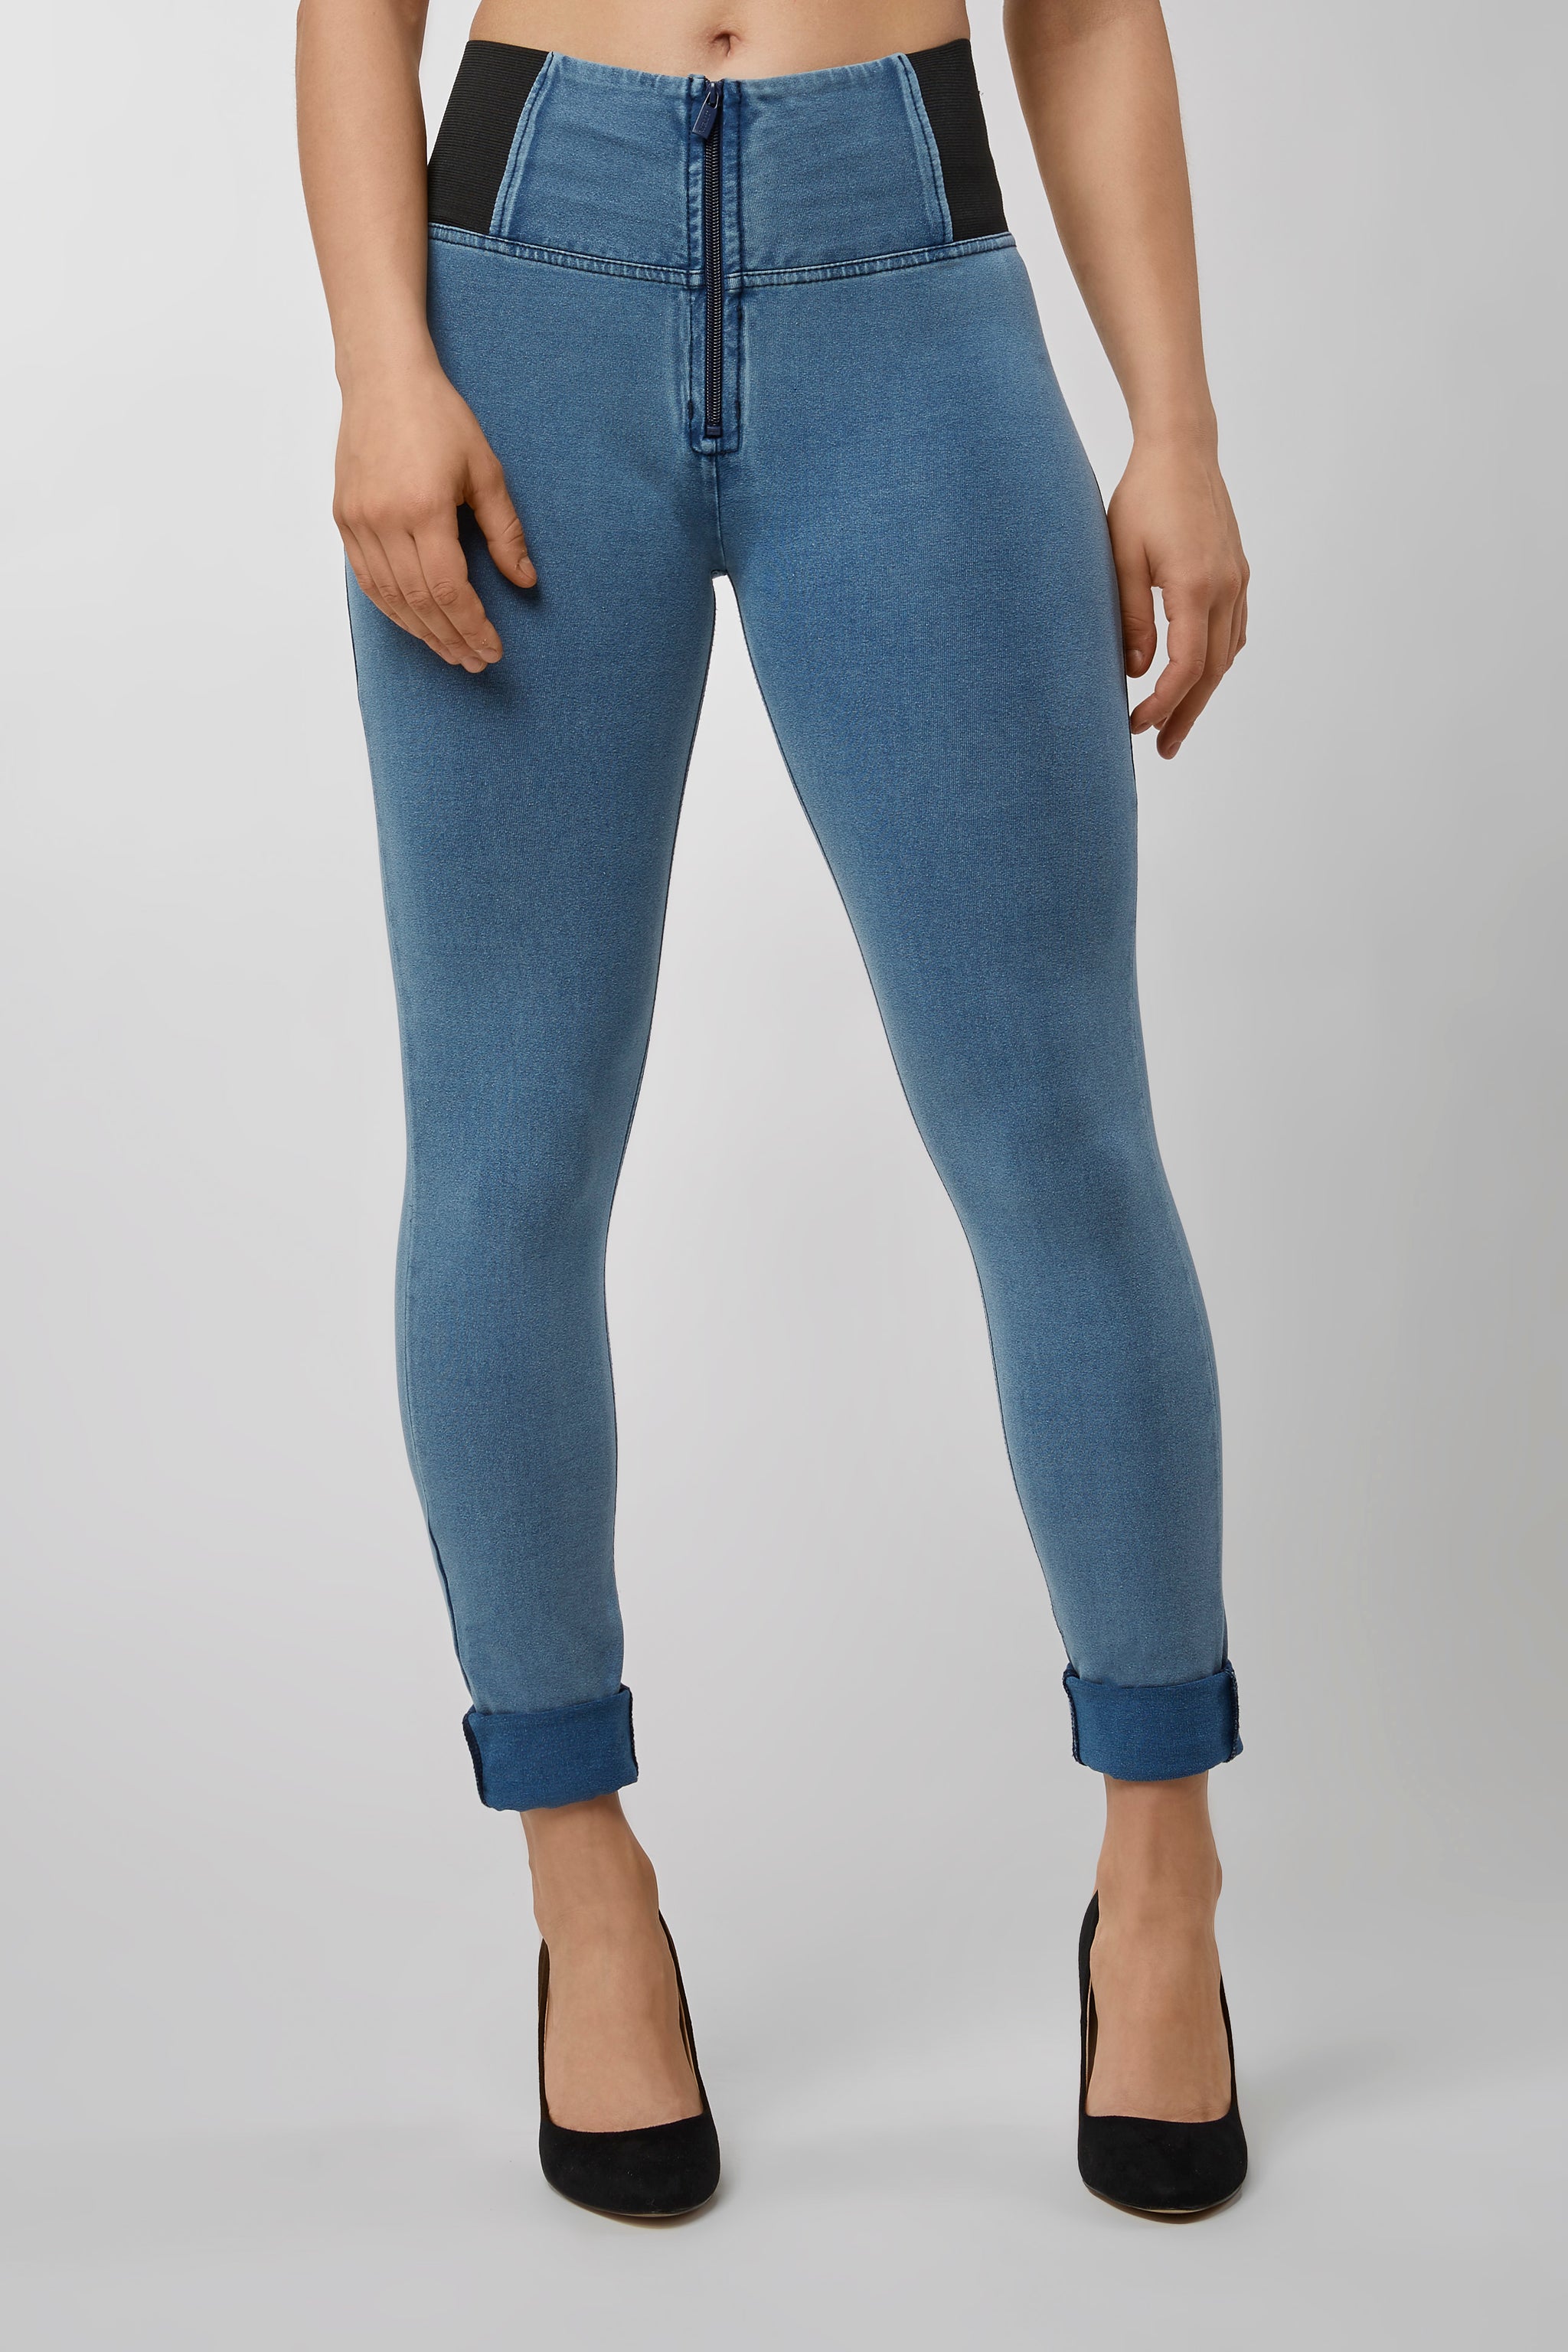 Buy The Fashion House Women's High Waist Tummy Tucker Stretchable Ankle  Length Denim Jeggings (28, Dark Blue) at